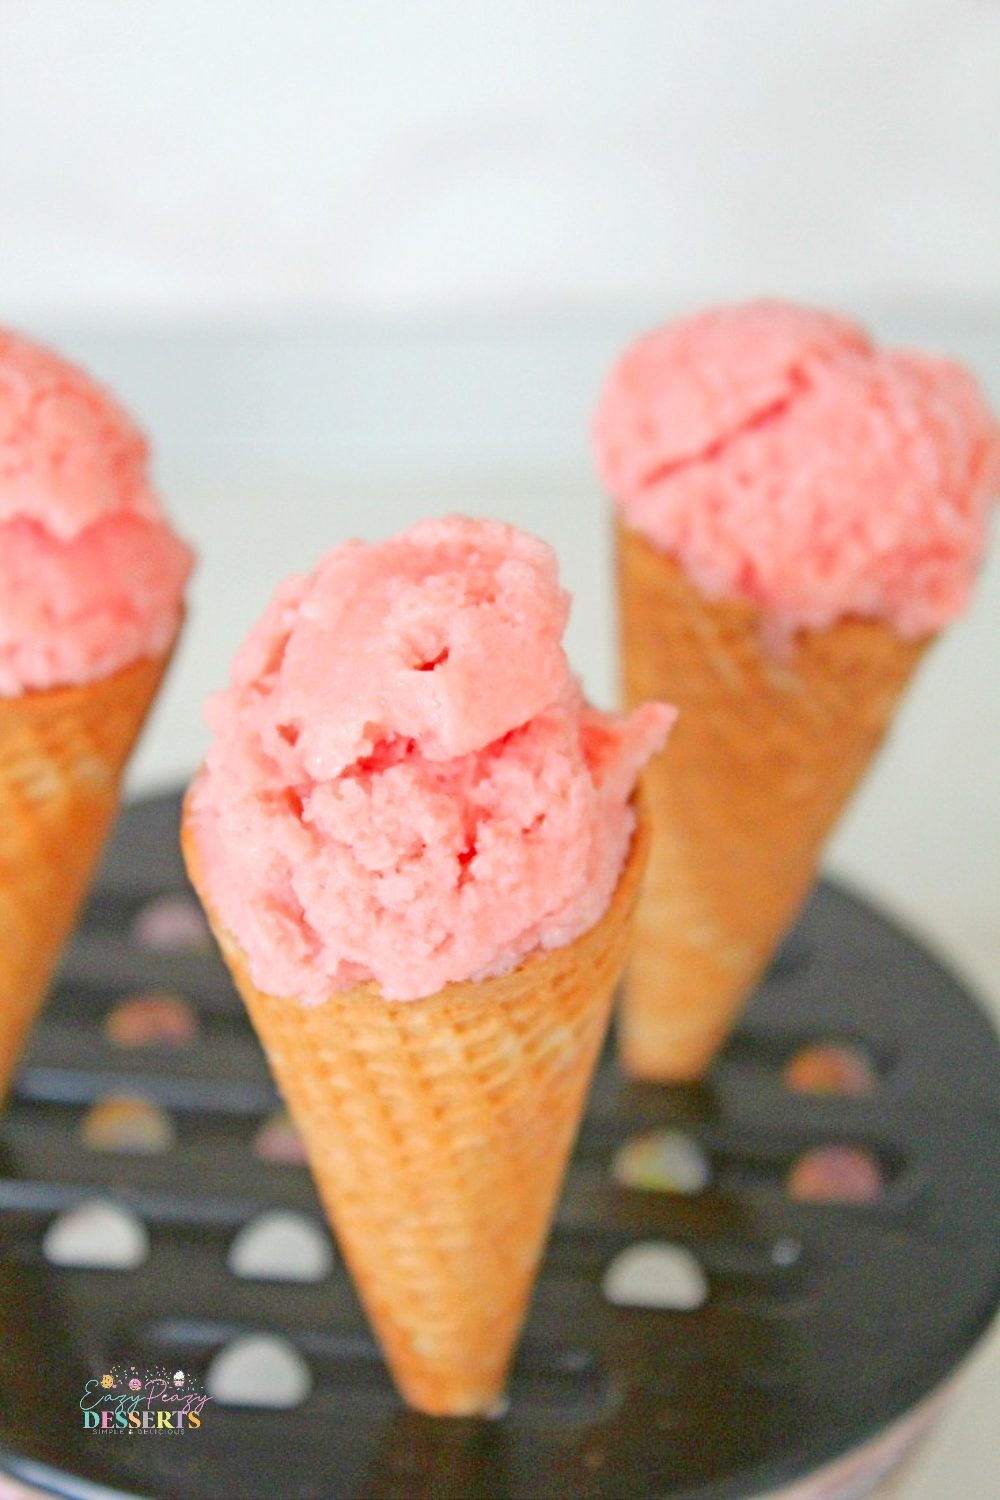 Homemade watermelon ice cream in ice cream cones